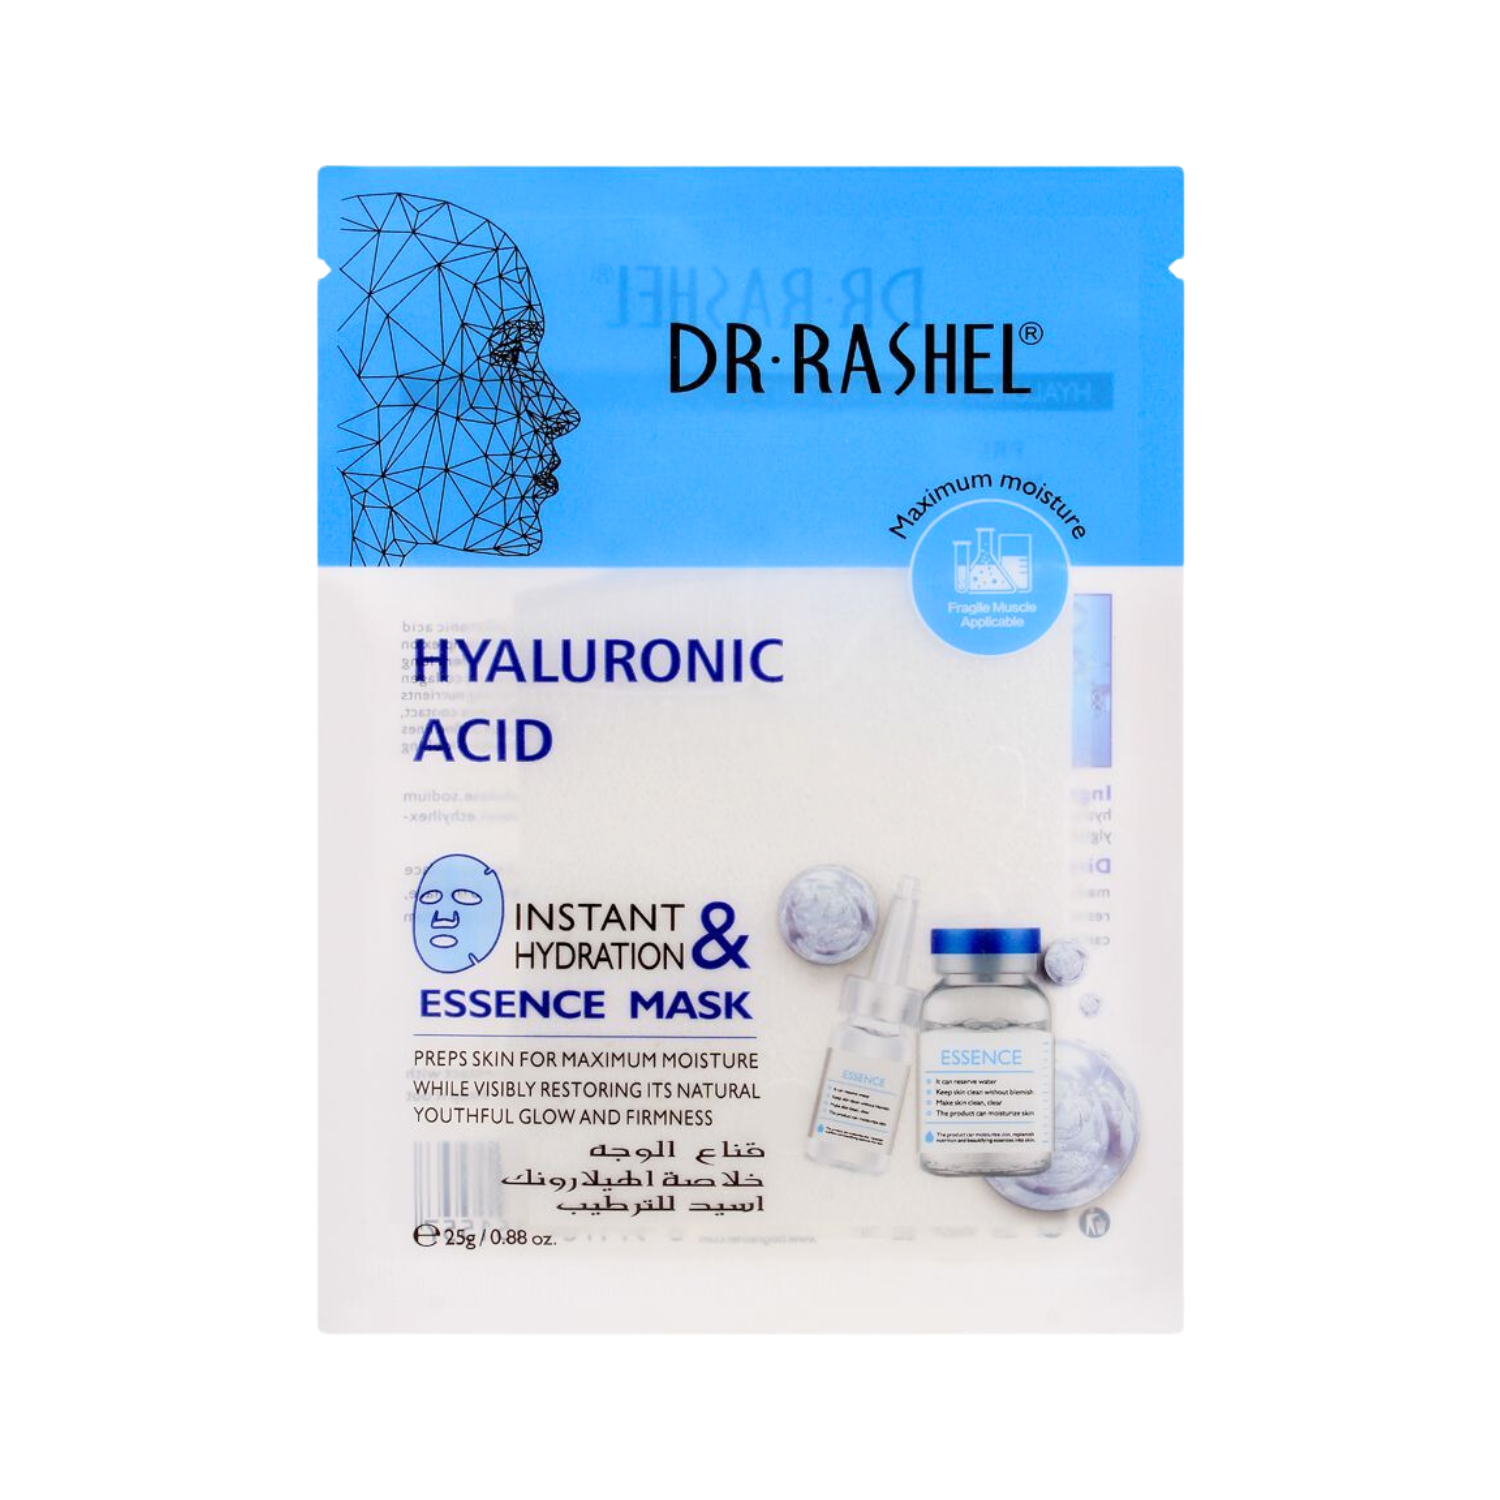 dr-rashel-hyaluronic-acid-instant-hydration-essence-mask-25g